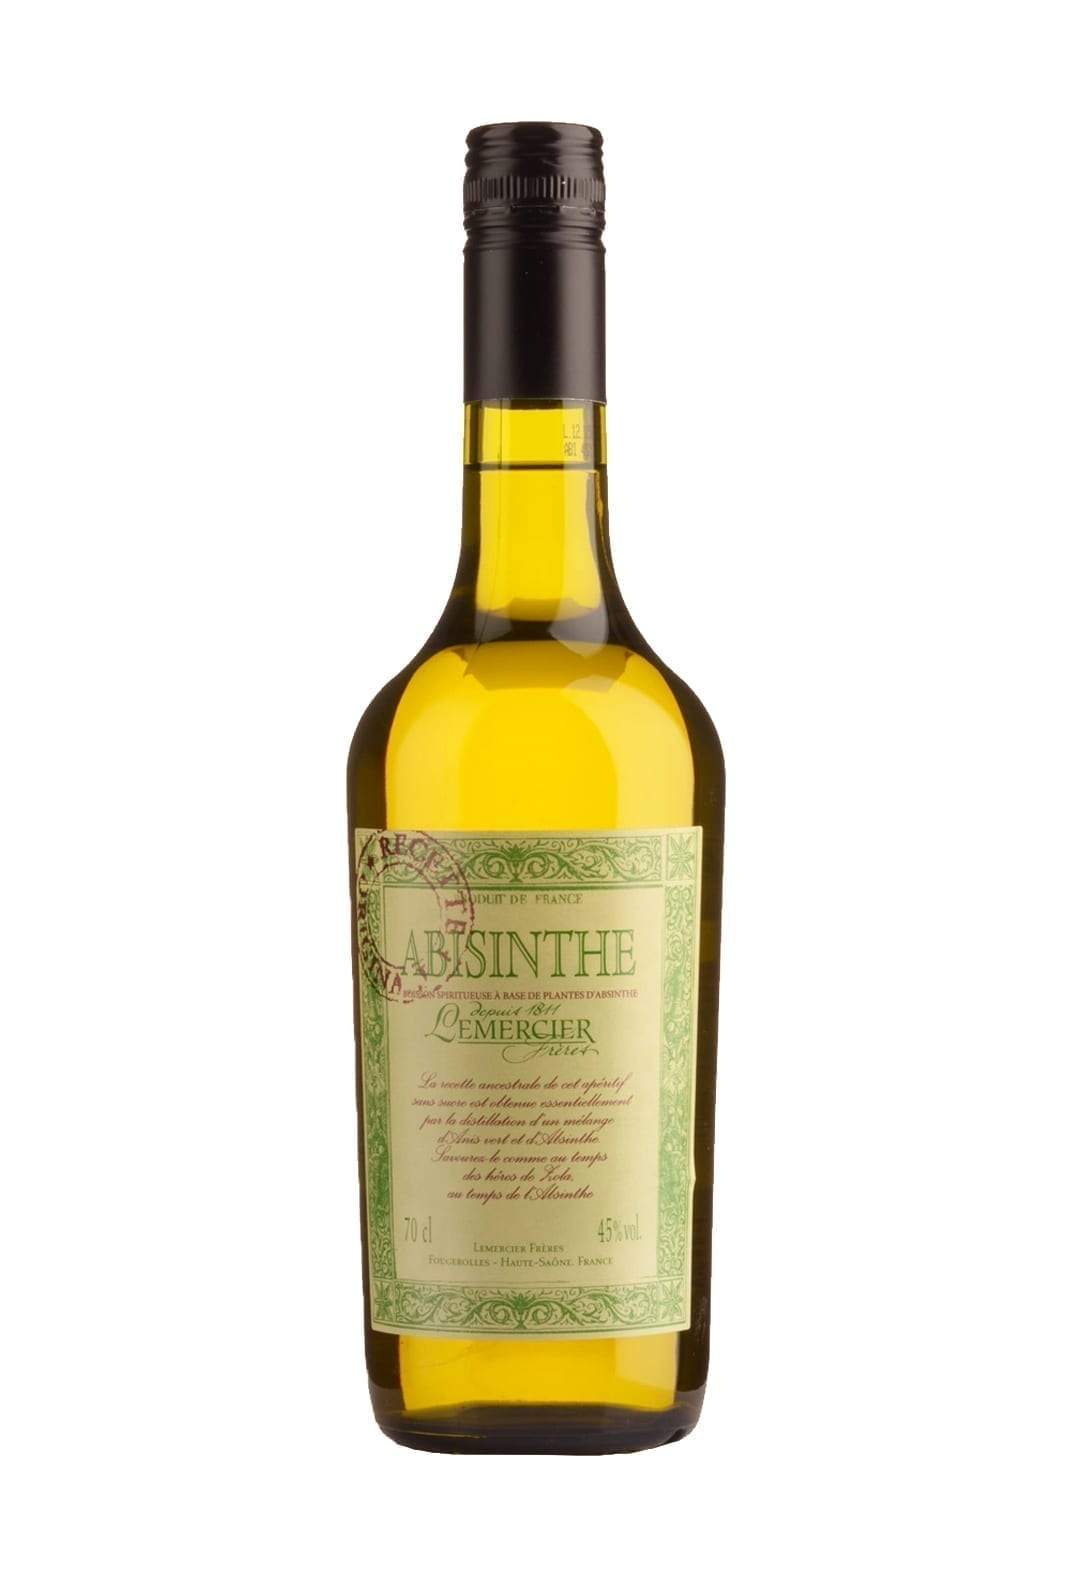 Lemercier Absinthe Green 45% 700ml | Absinthe | Shop online at Spirits of France